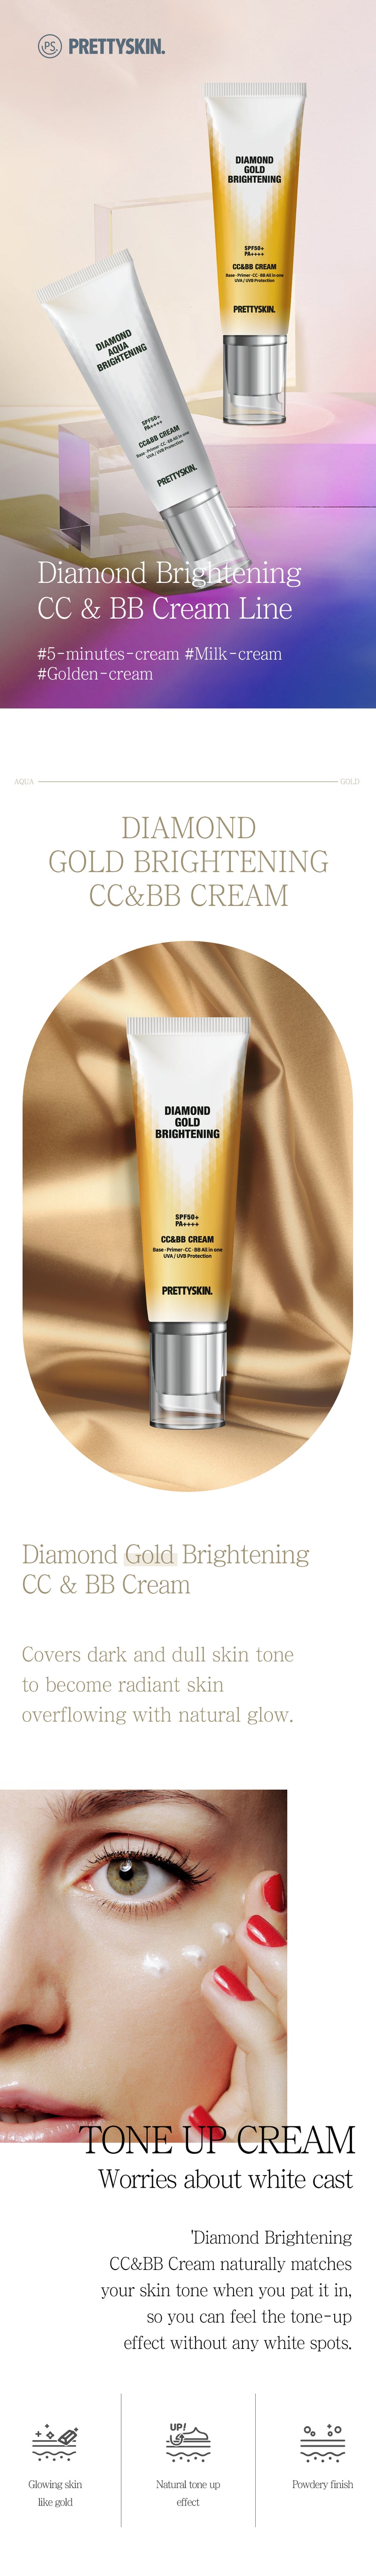 PRETTYSKIN DIAMOND GOLD BRIGHTENING CC&BB CREAM – Kpop Beauty